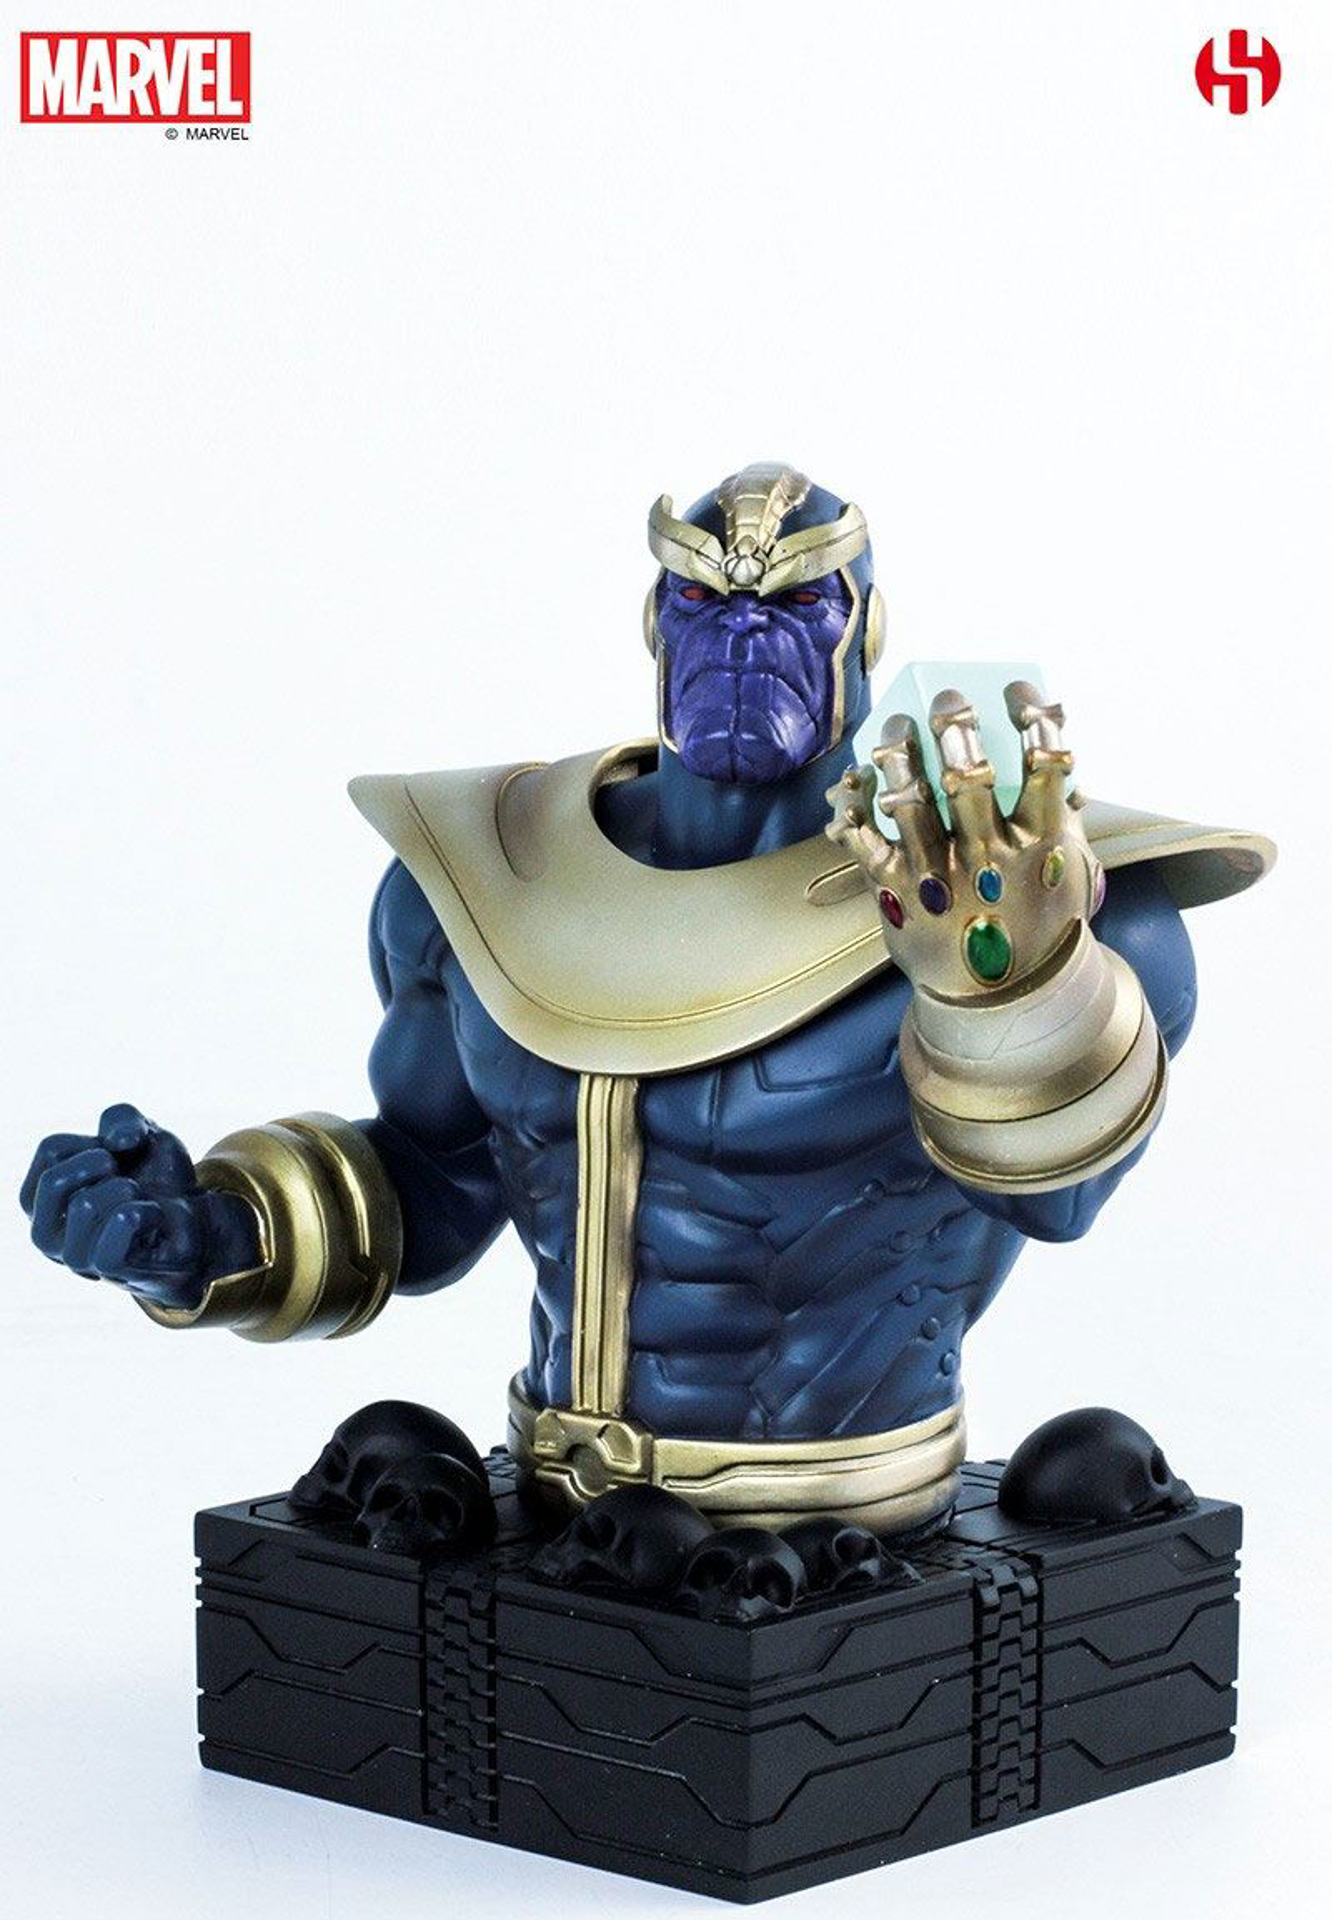 Marvel - Buste de Thanos 23cm